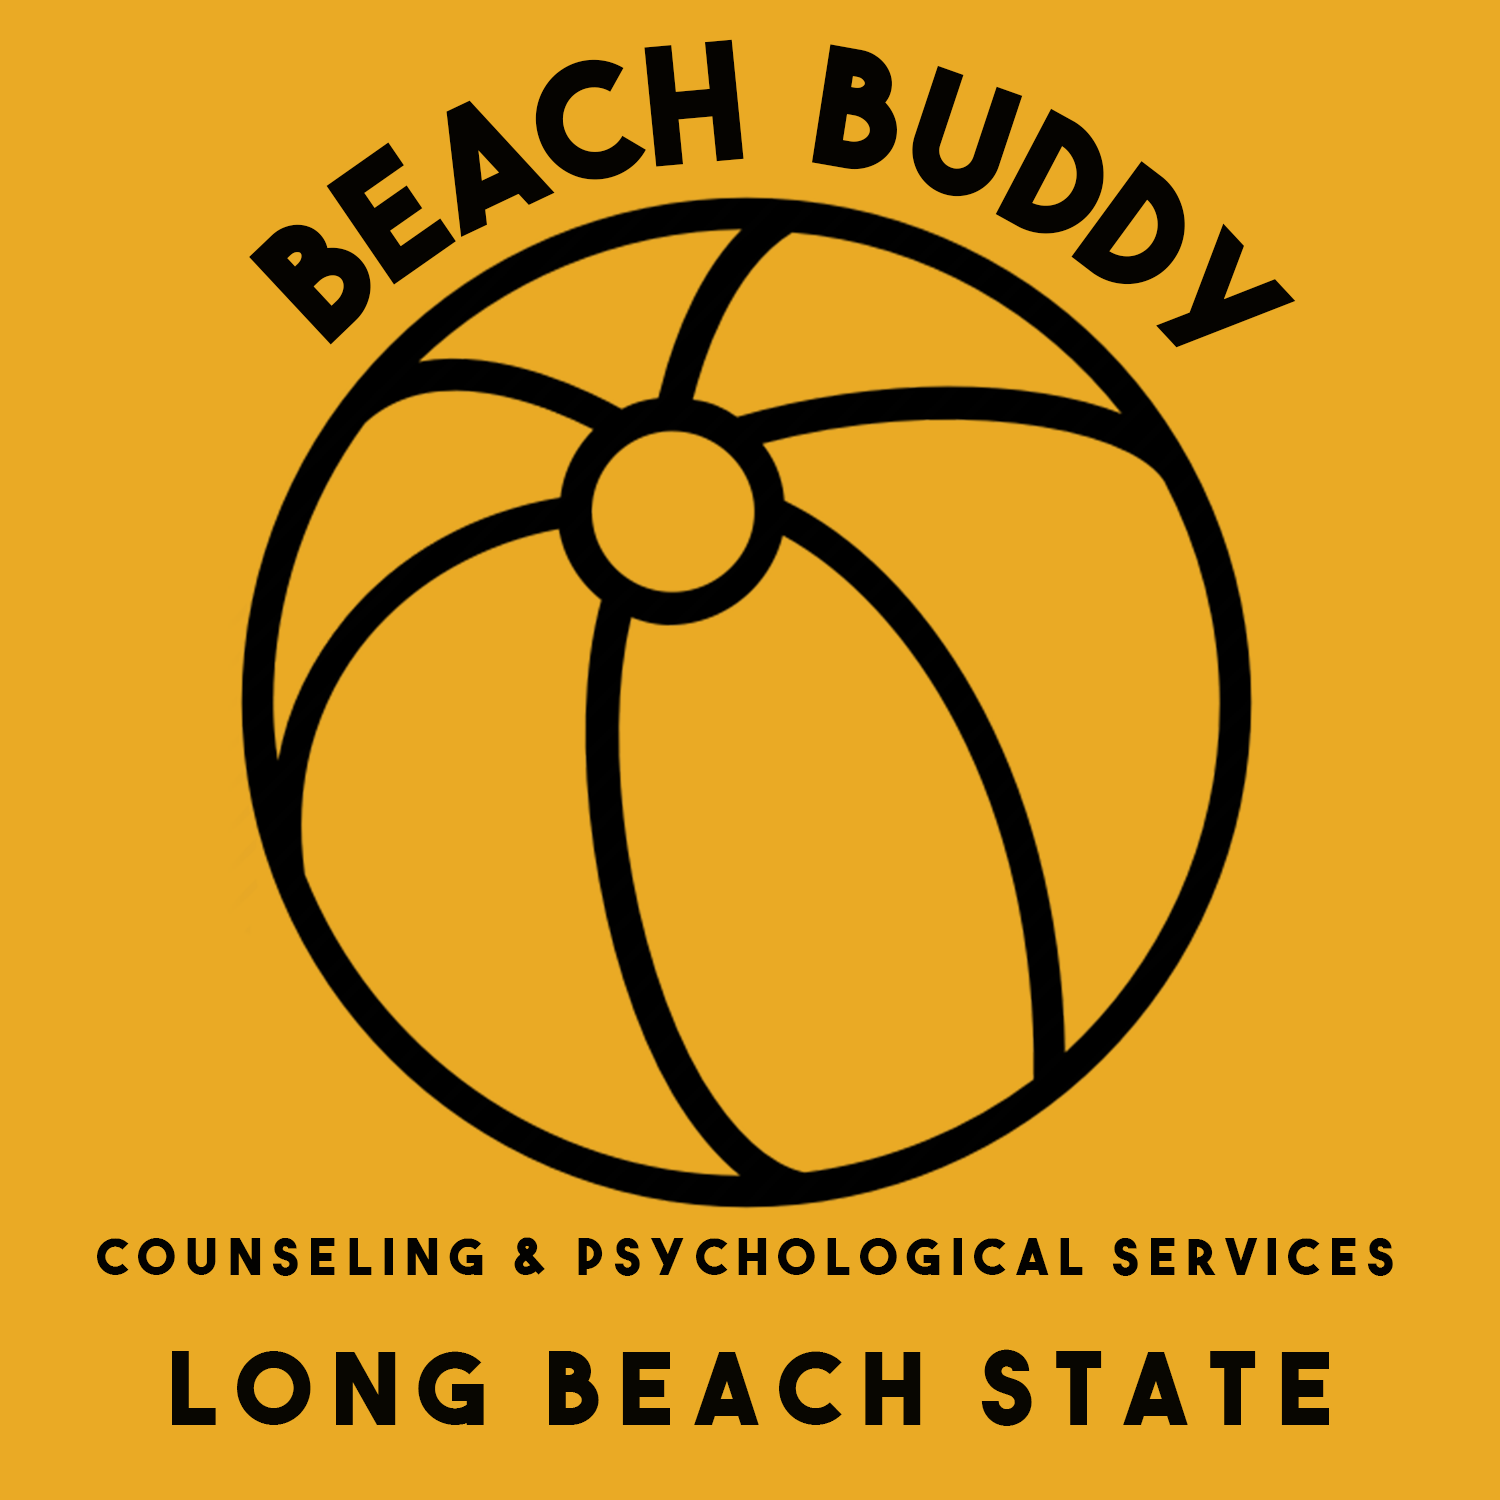 Beach Buddy logo